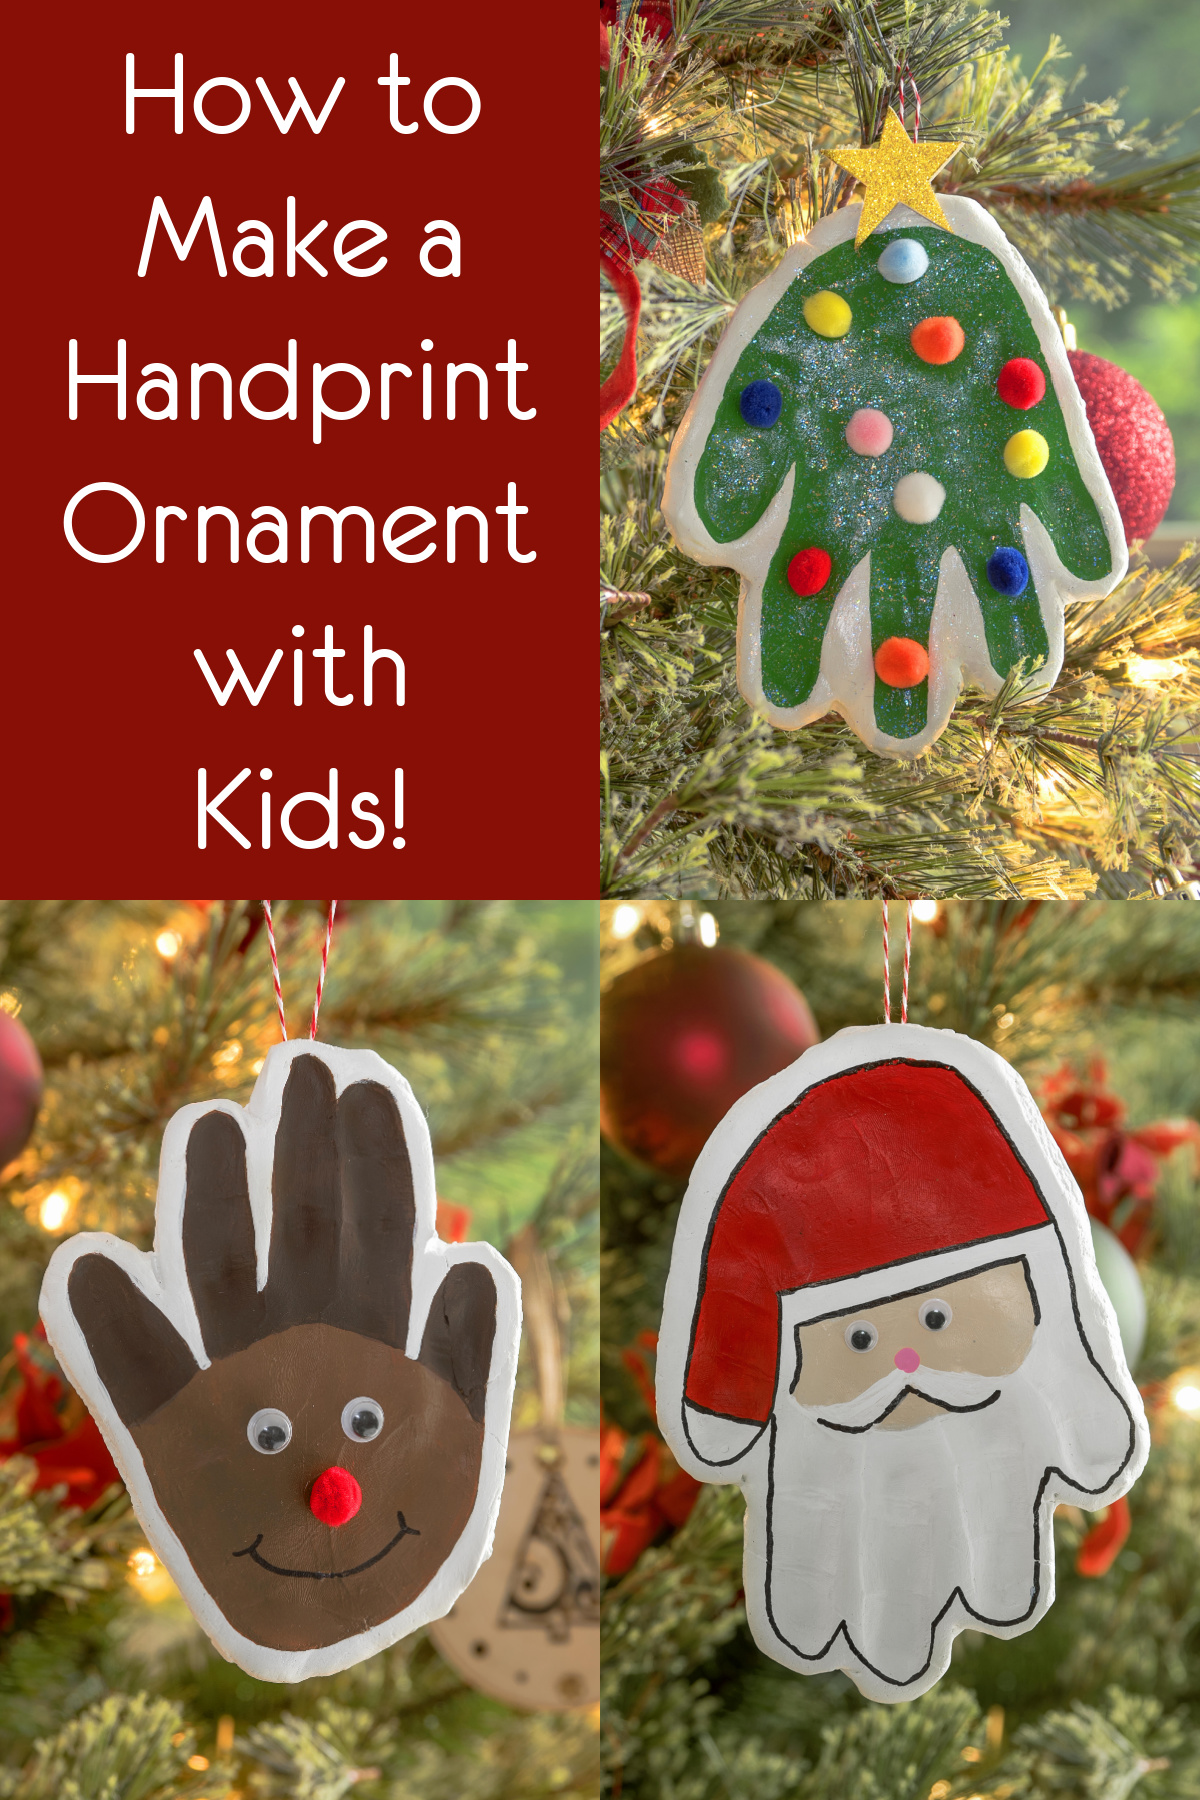 How to make handprint ornaments